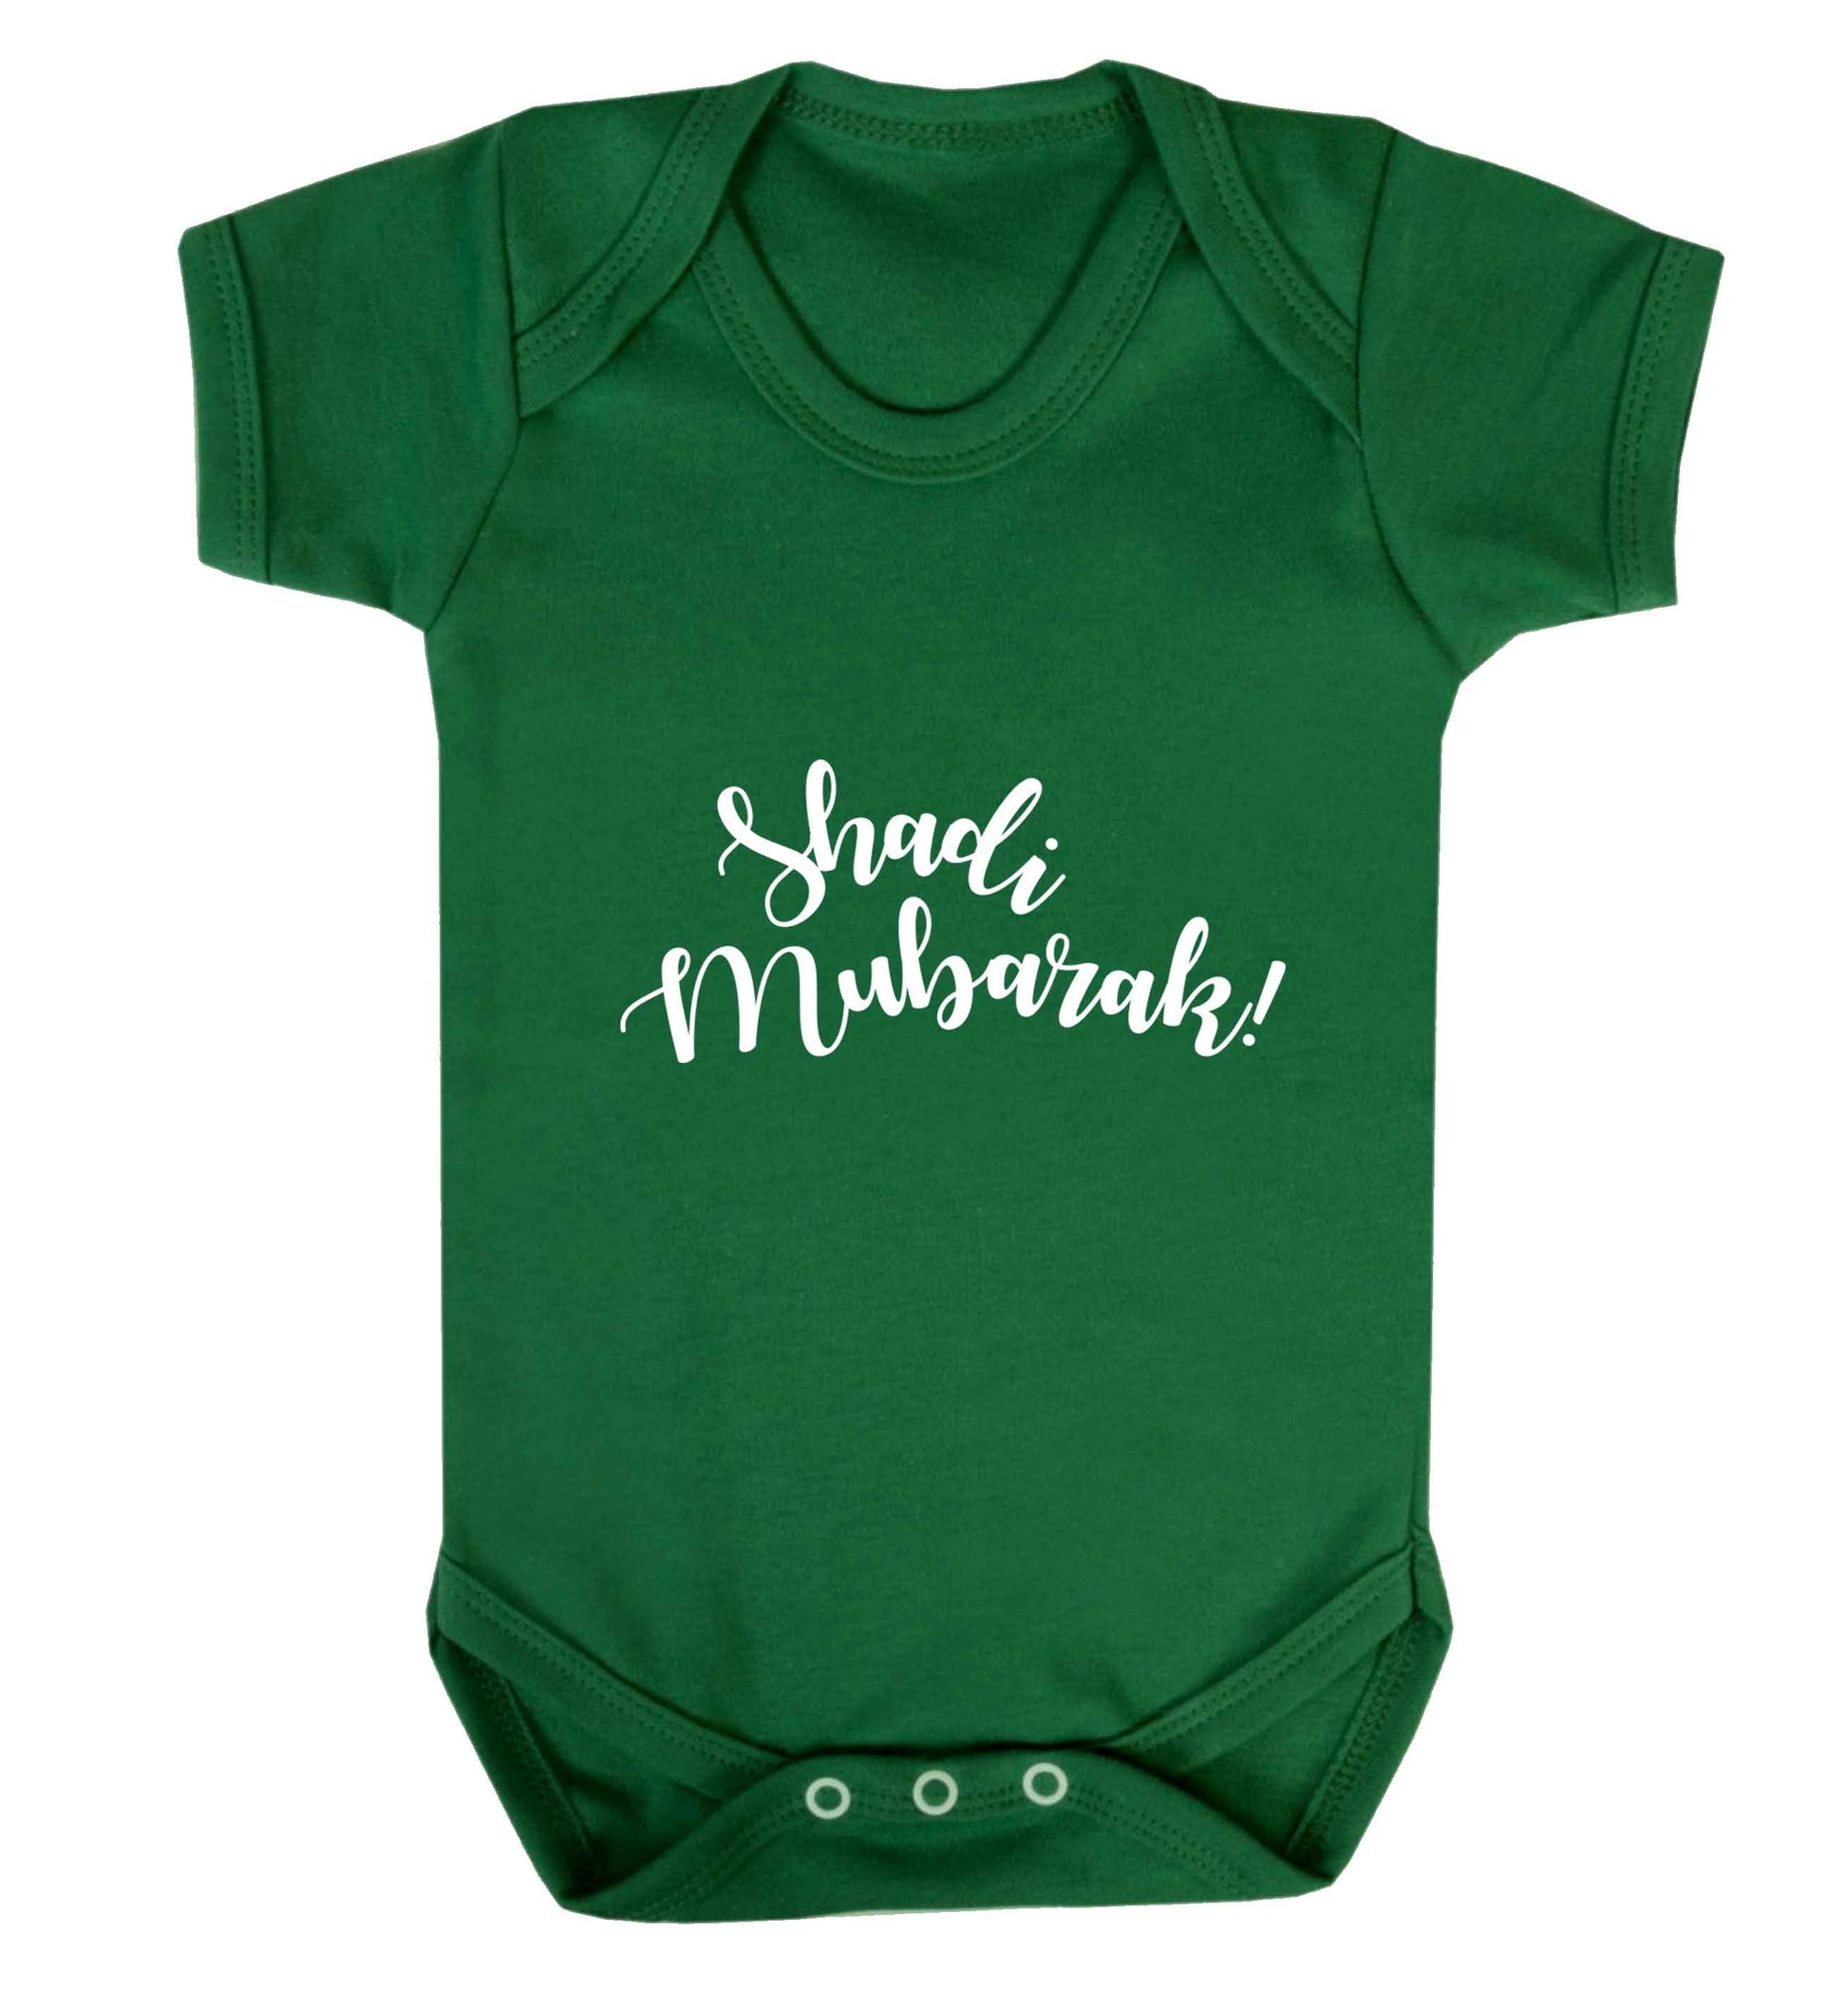 Shadi mubarak baby vest green 18-24 months